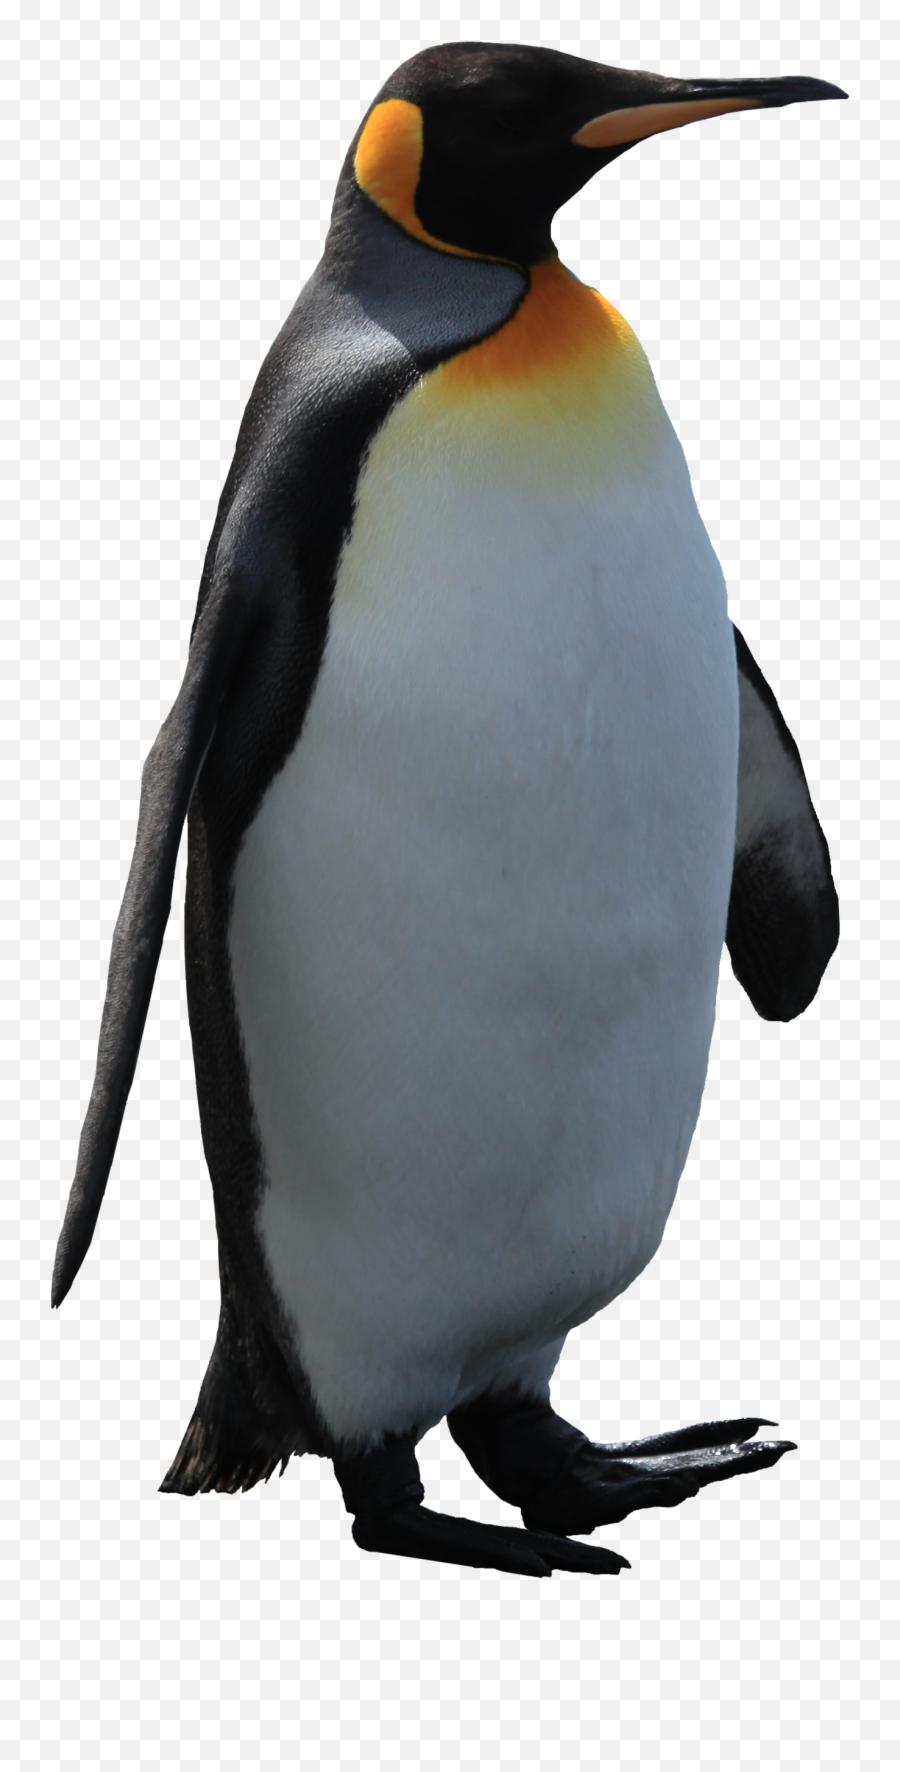 Imperator Penguin Png Image - Penguin Transparent Background,Penguin Transparent